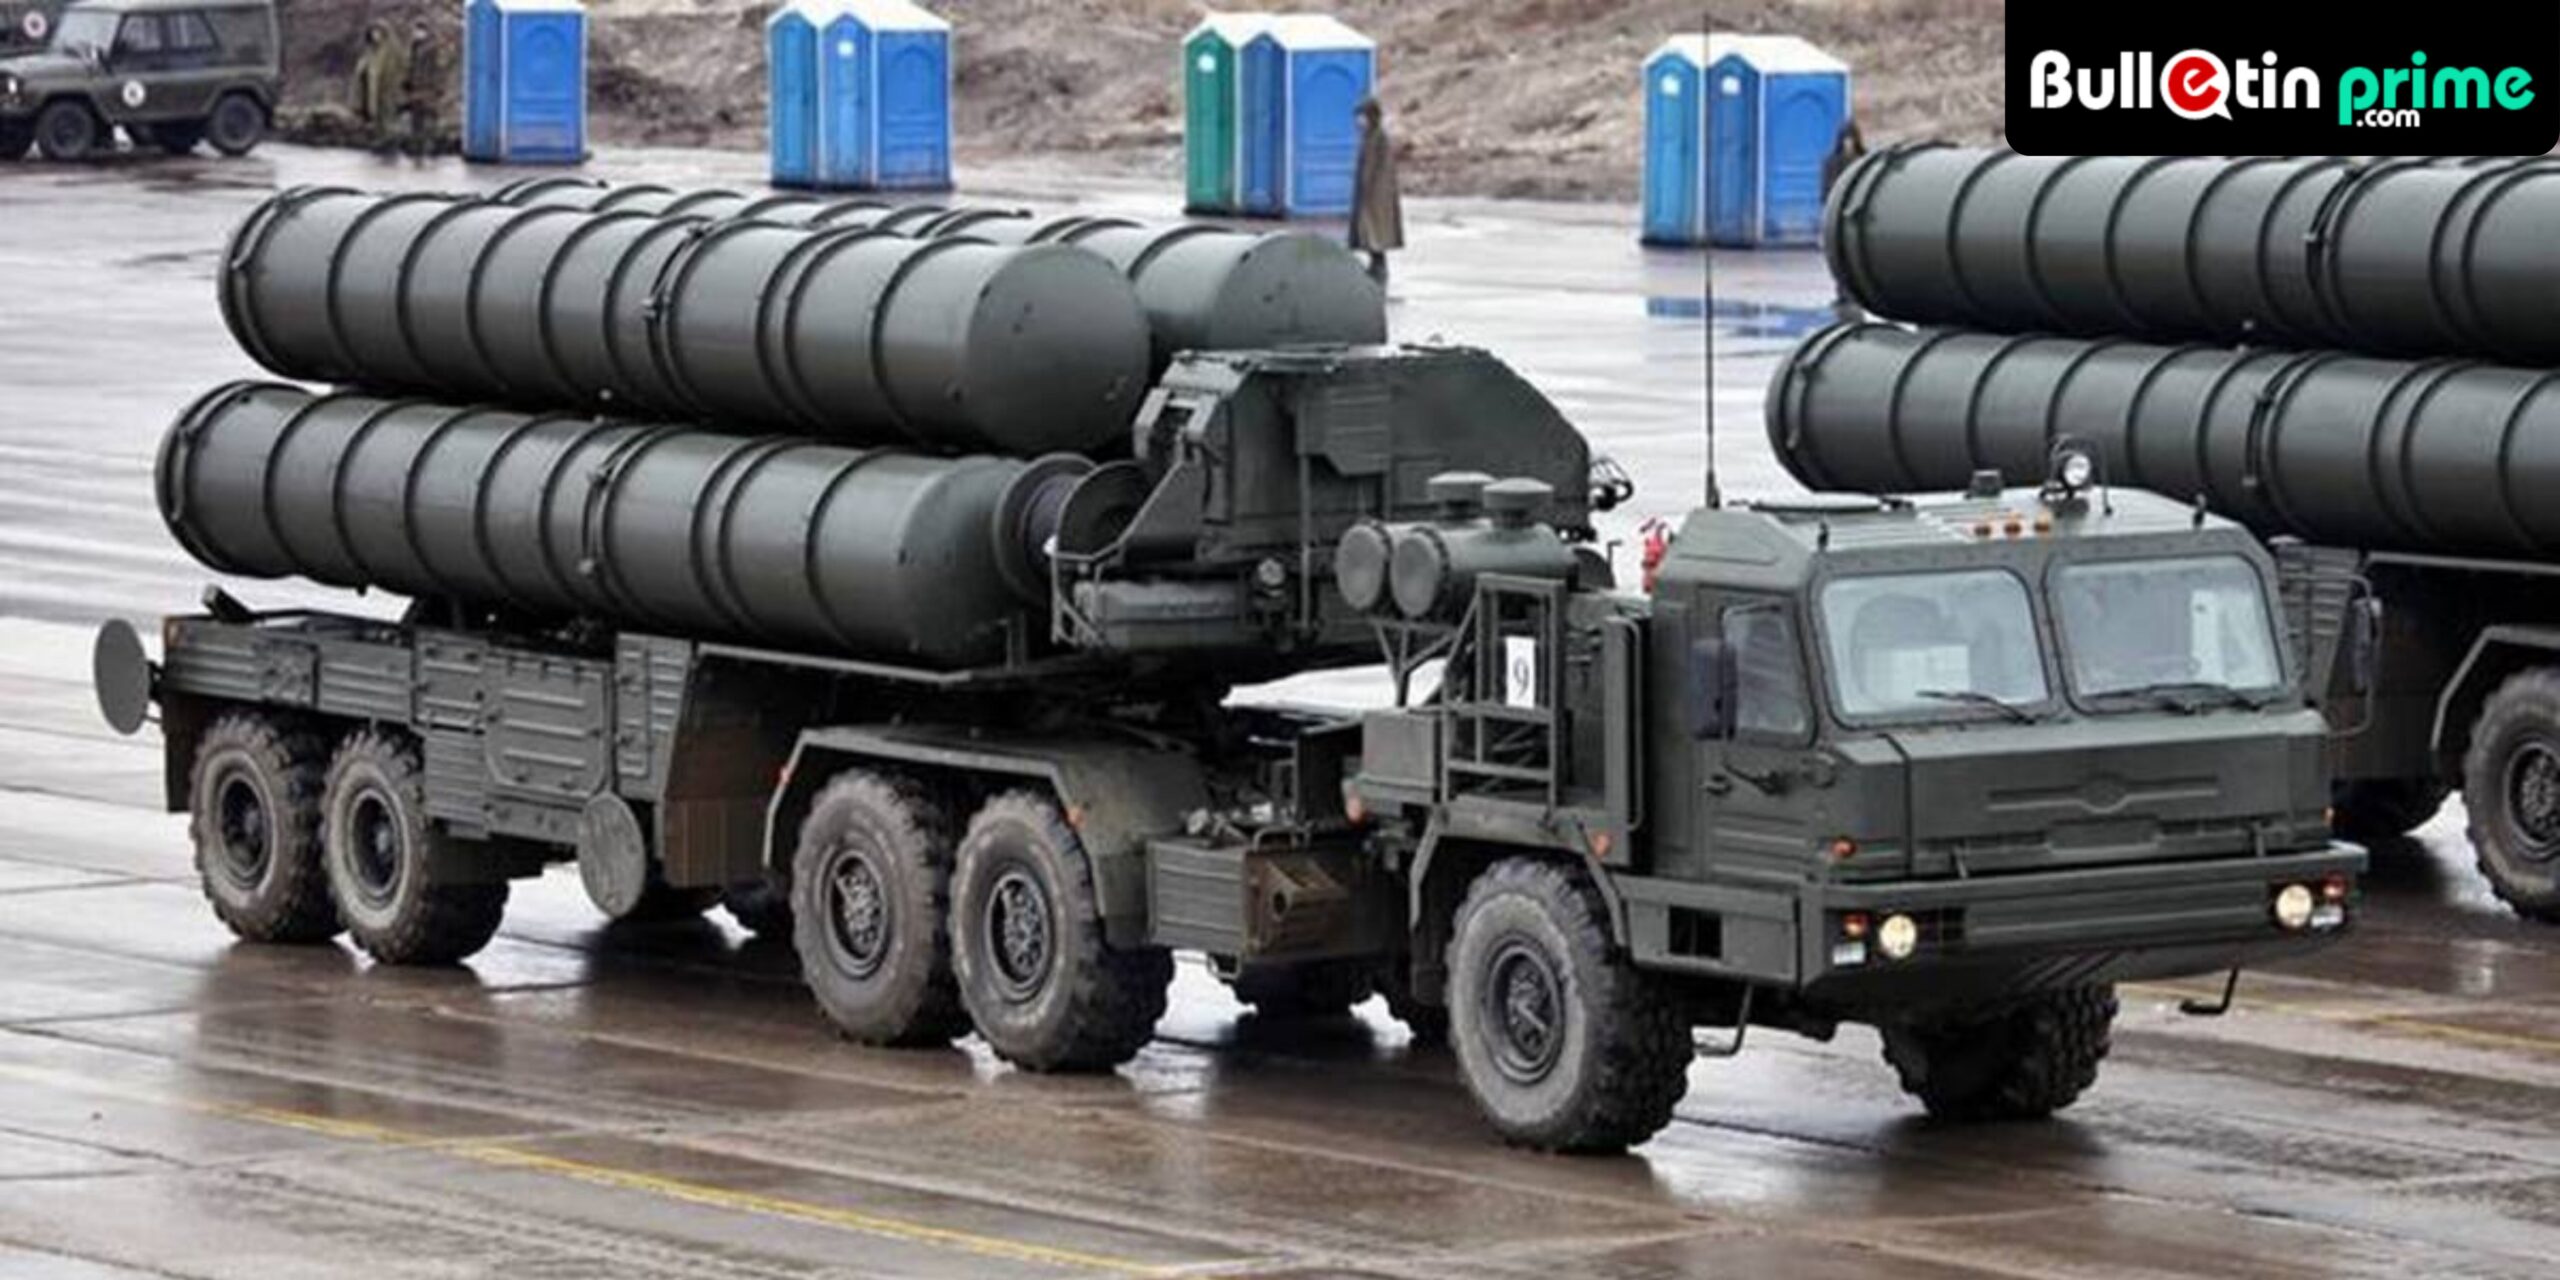 Estonia will purchase American rocket artillery